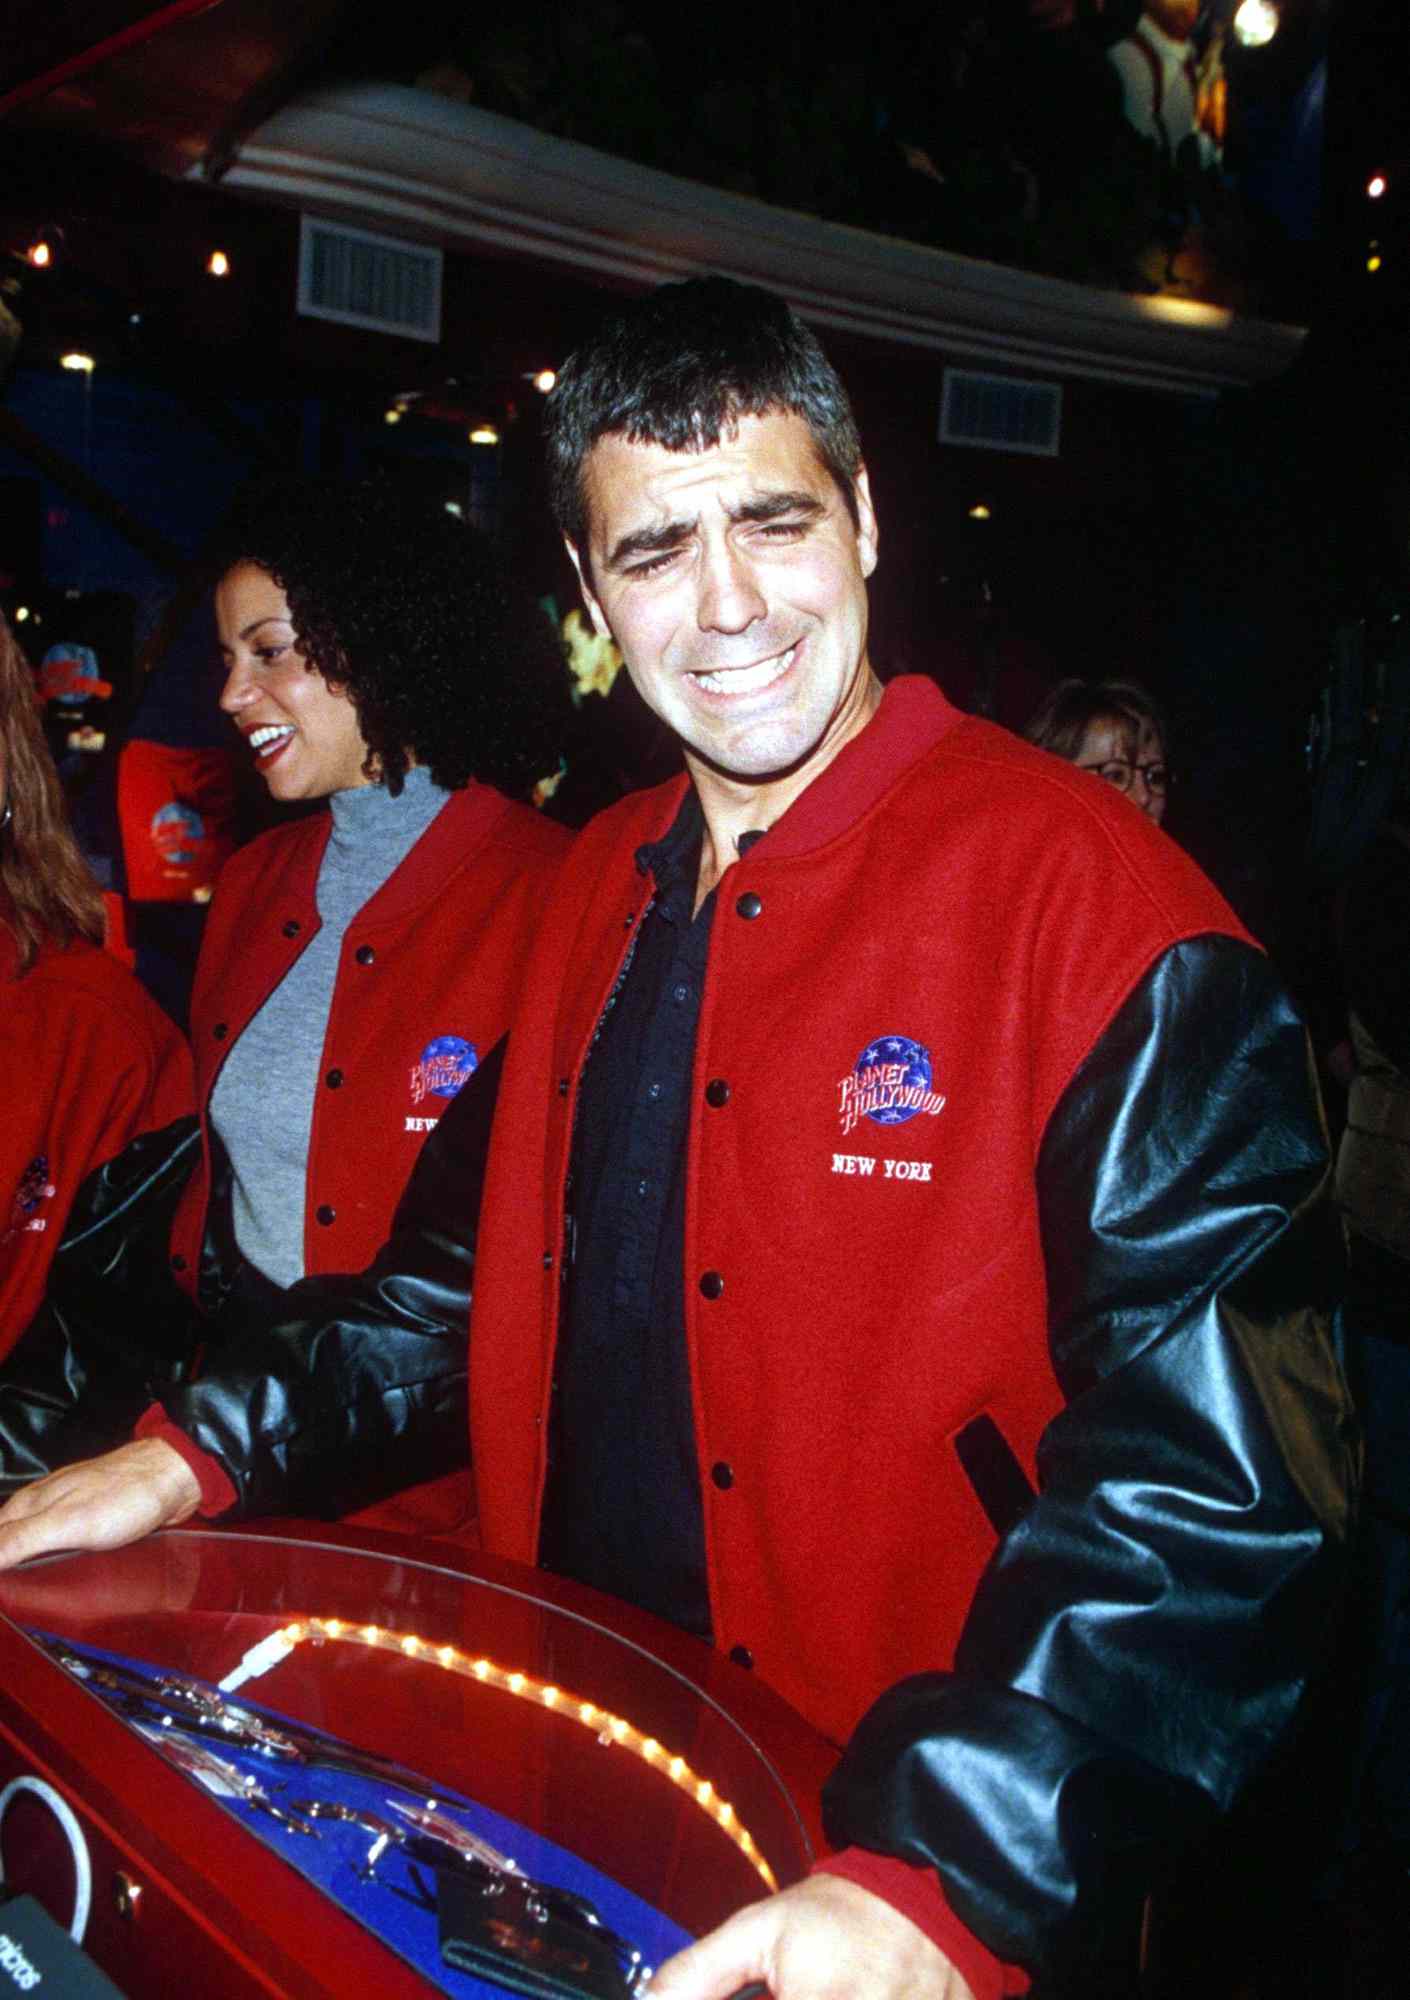 Stars of TV 'ER' Series at Planet Hollywood, New York, America - 1995